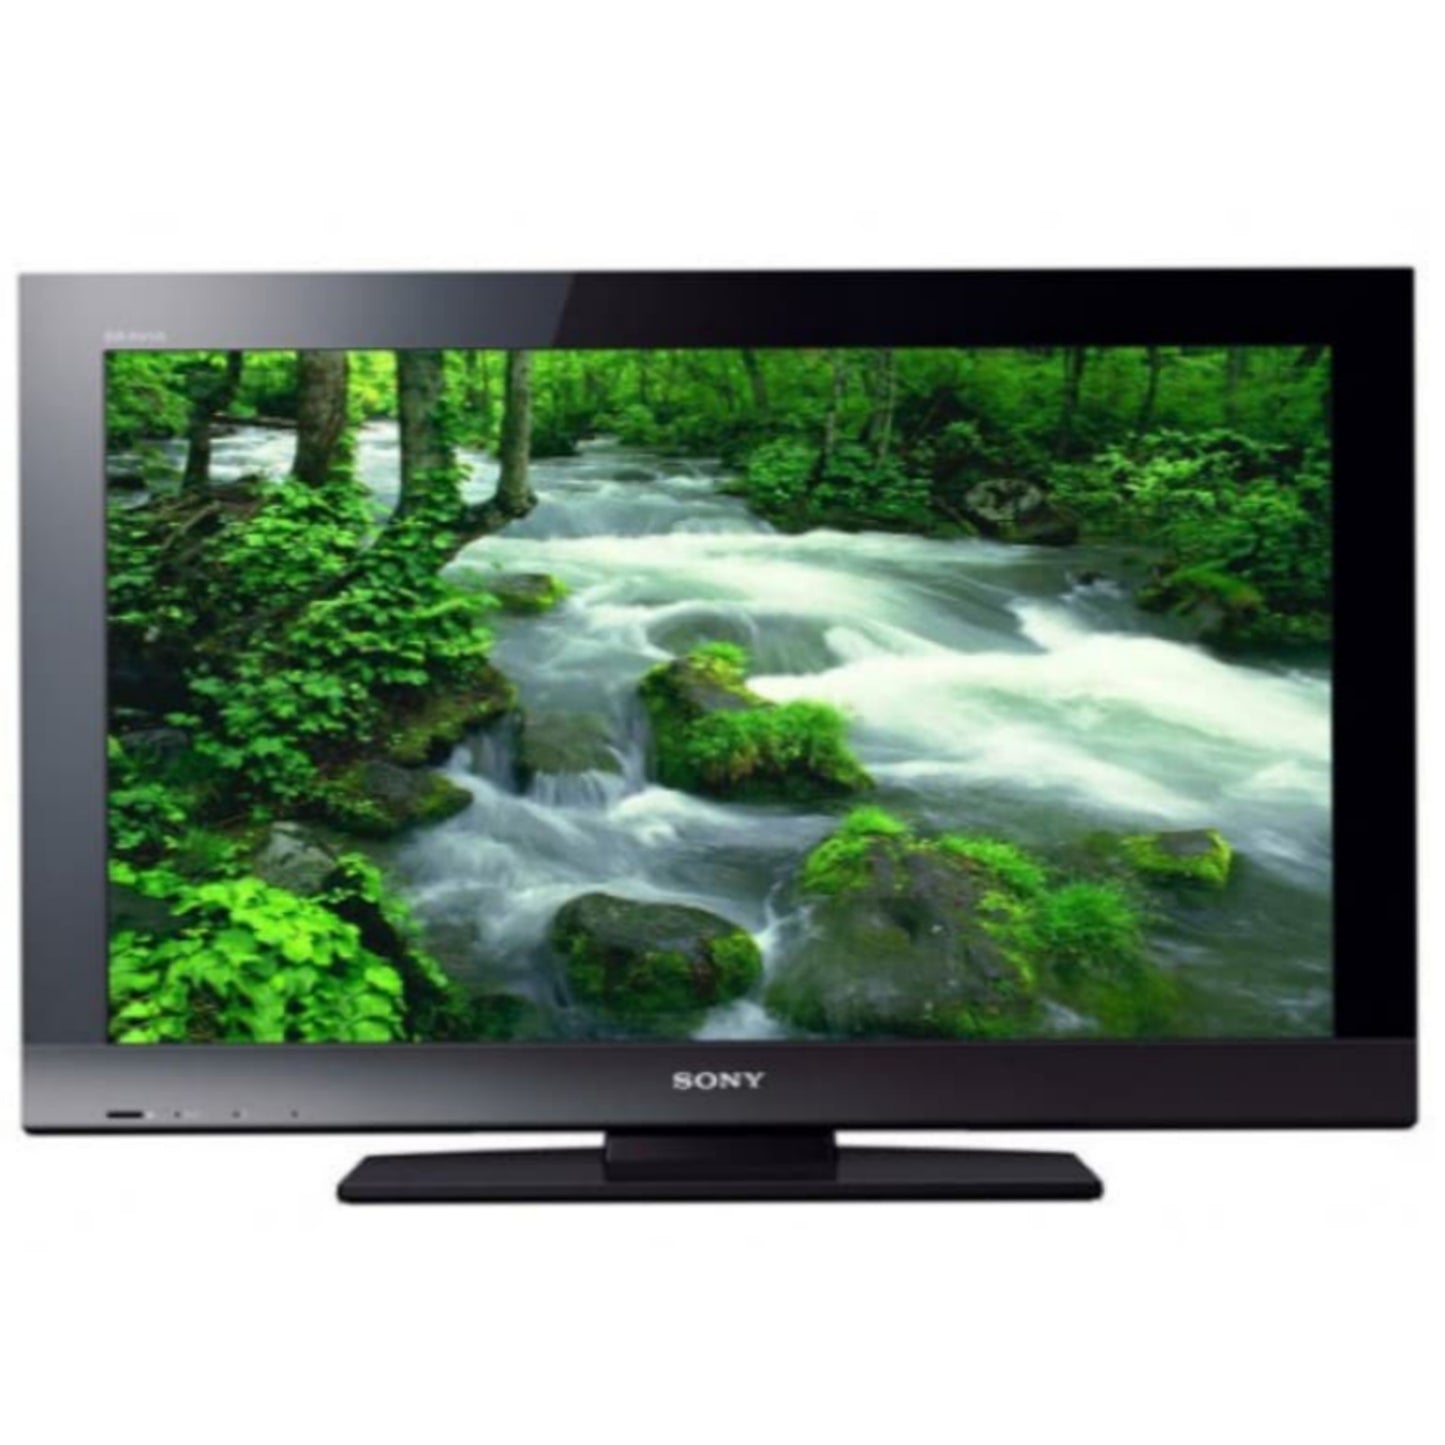 Sony BRAVIA 26 Inch LCD TV - London Used